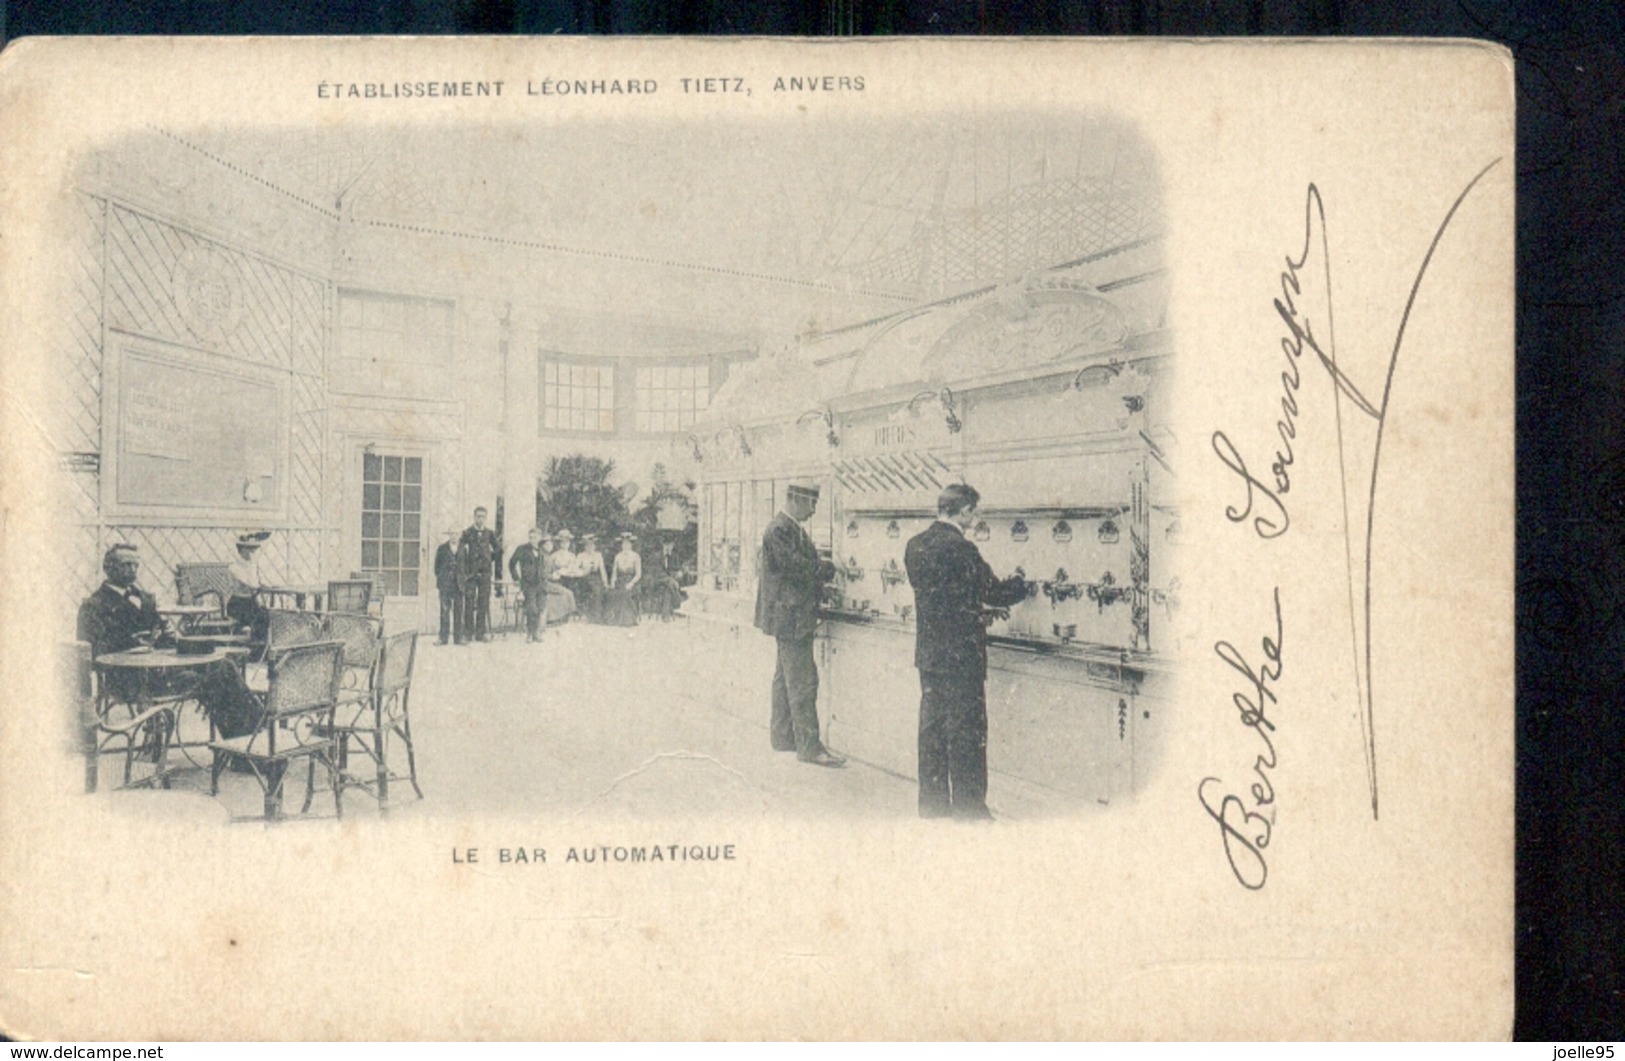 Antwerpen - Le Bar Automatique - Leonahard Tietz - 1902 - Antwerpen